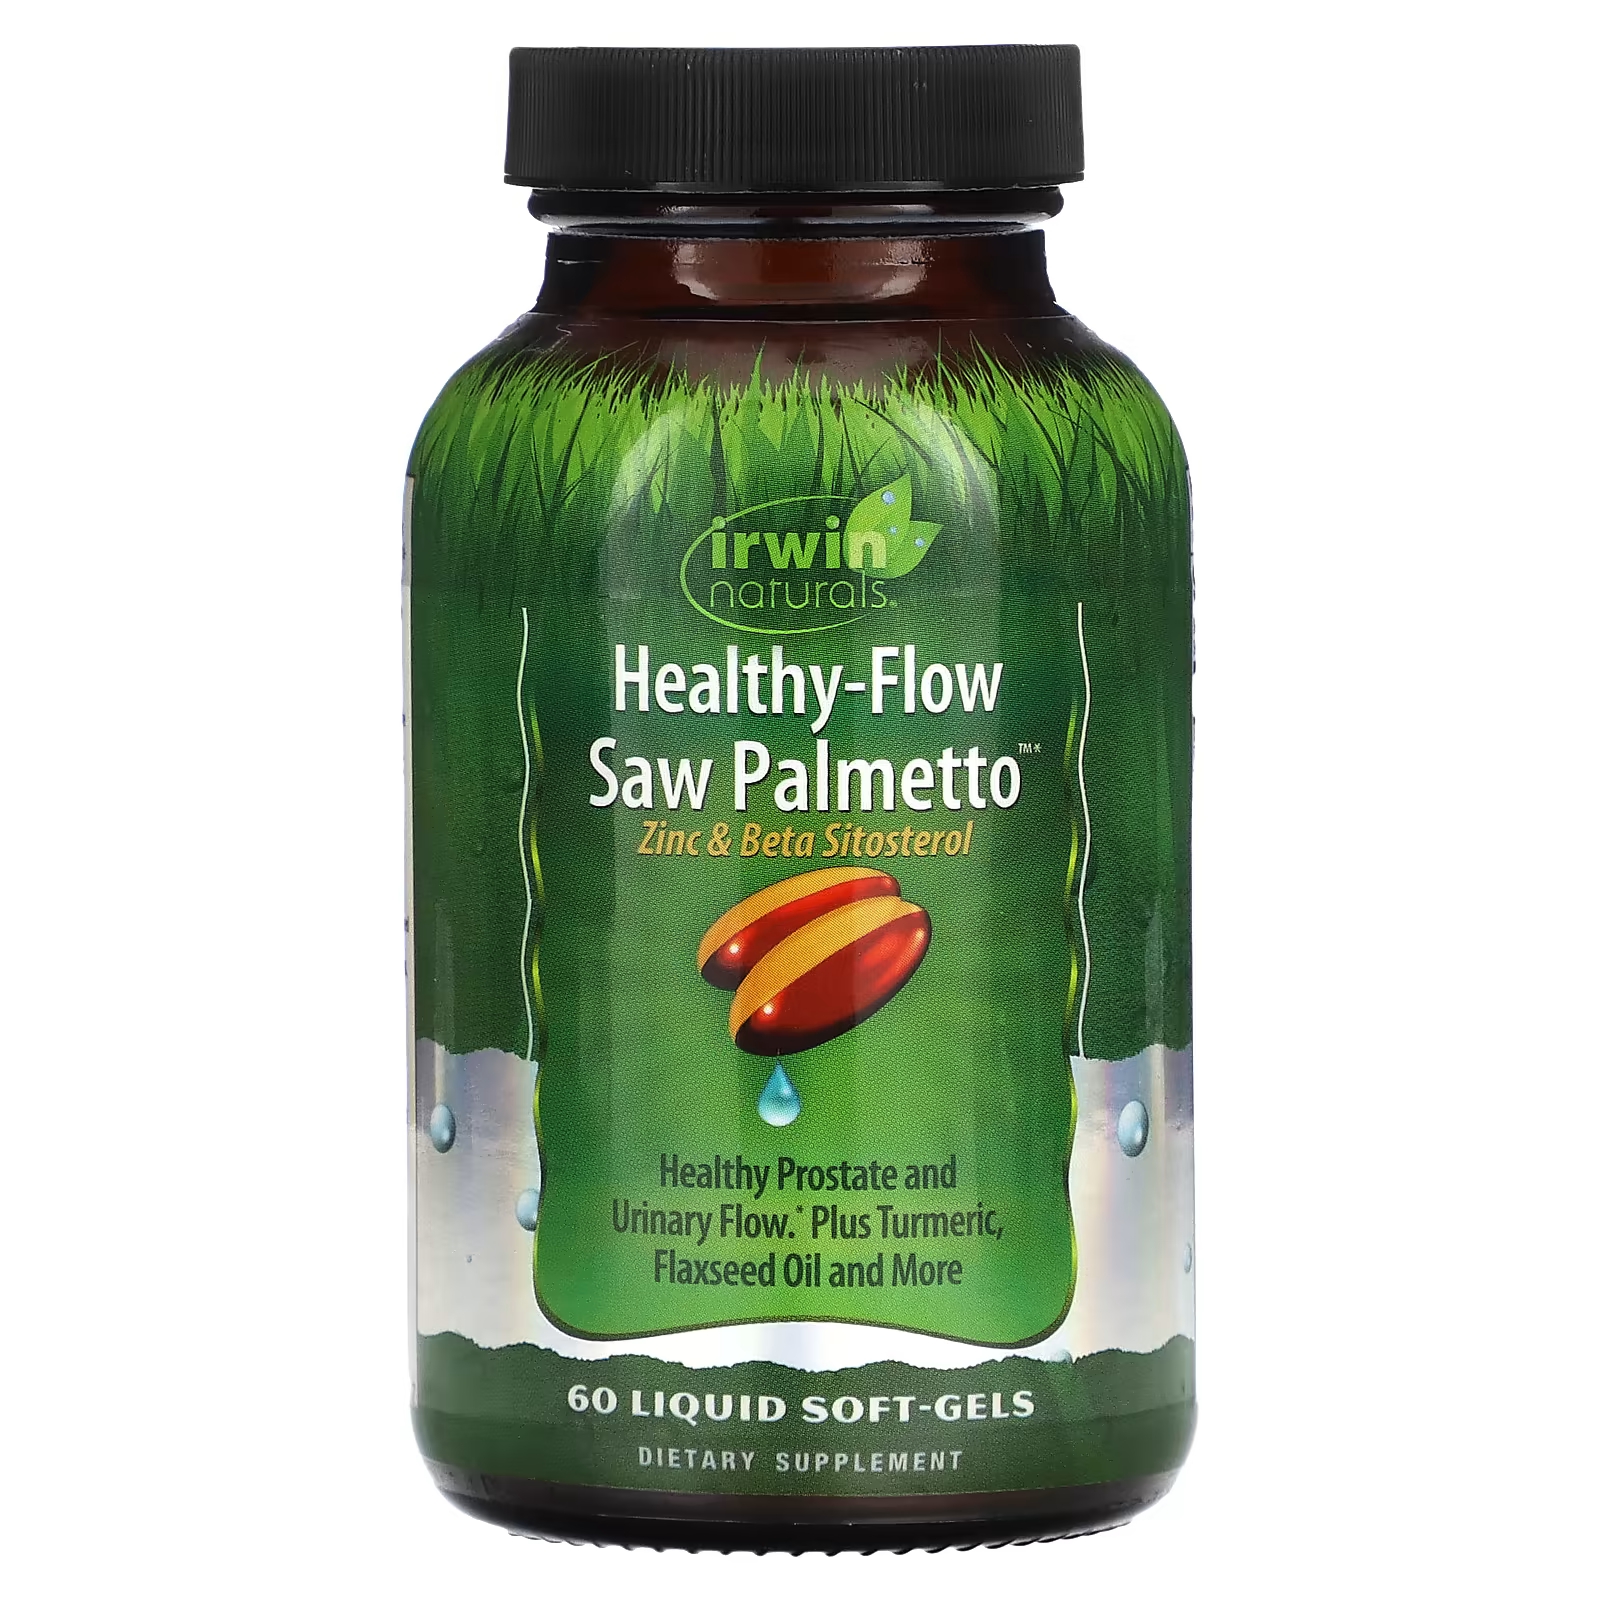 Пищевая добавка Irwin Naturals Healthy-Flow Saw Palmetto, 60 жидких таблеток